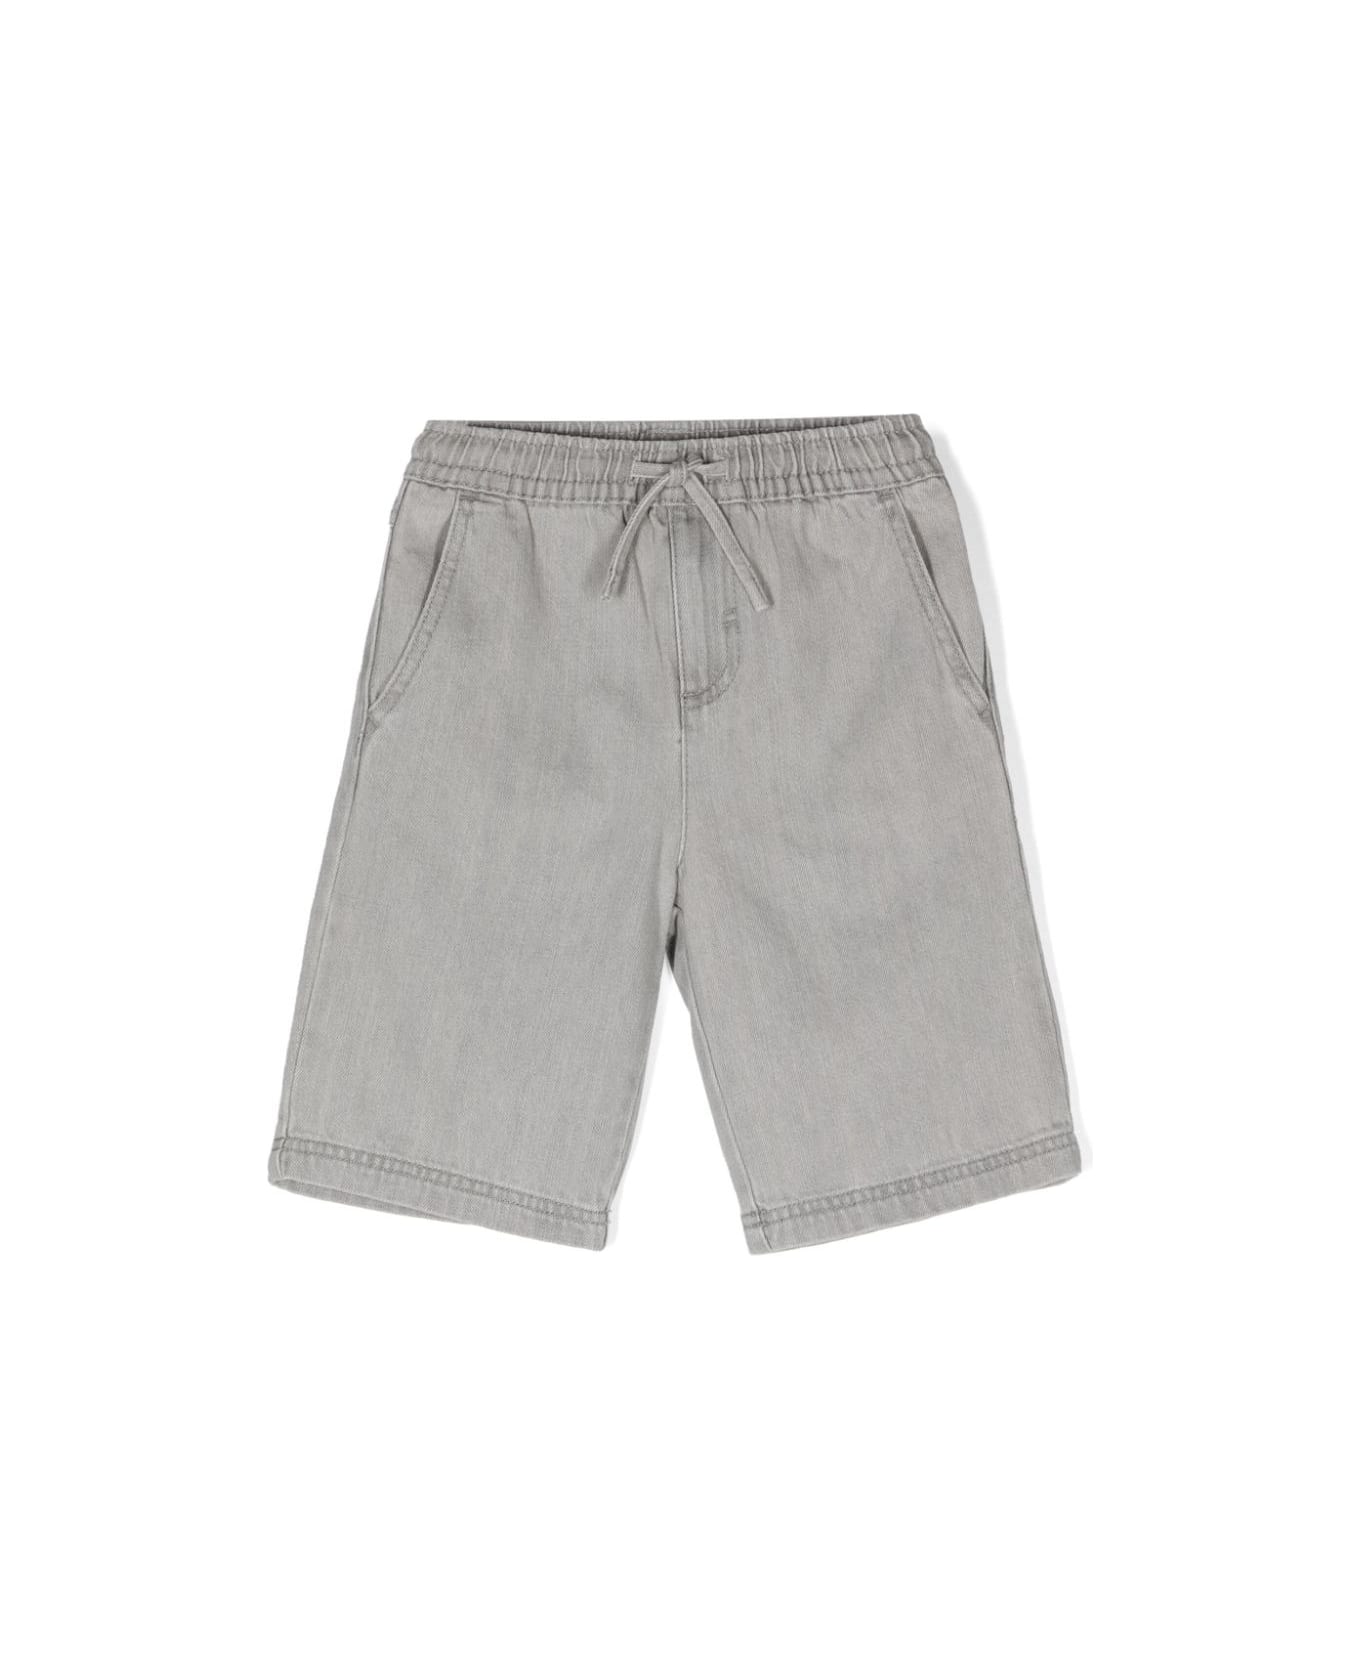 Stella McCartney Kids Grey Cotton Bermuda Shorts - Grey